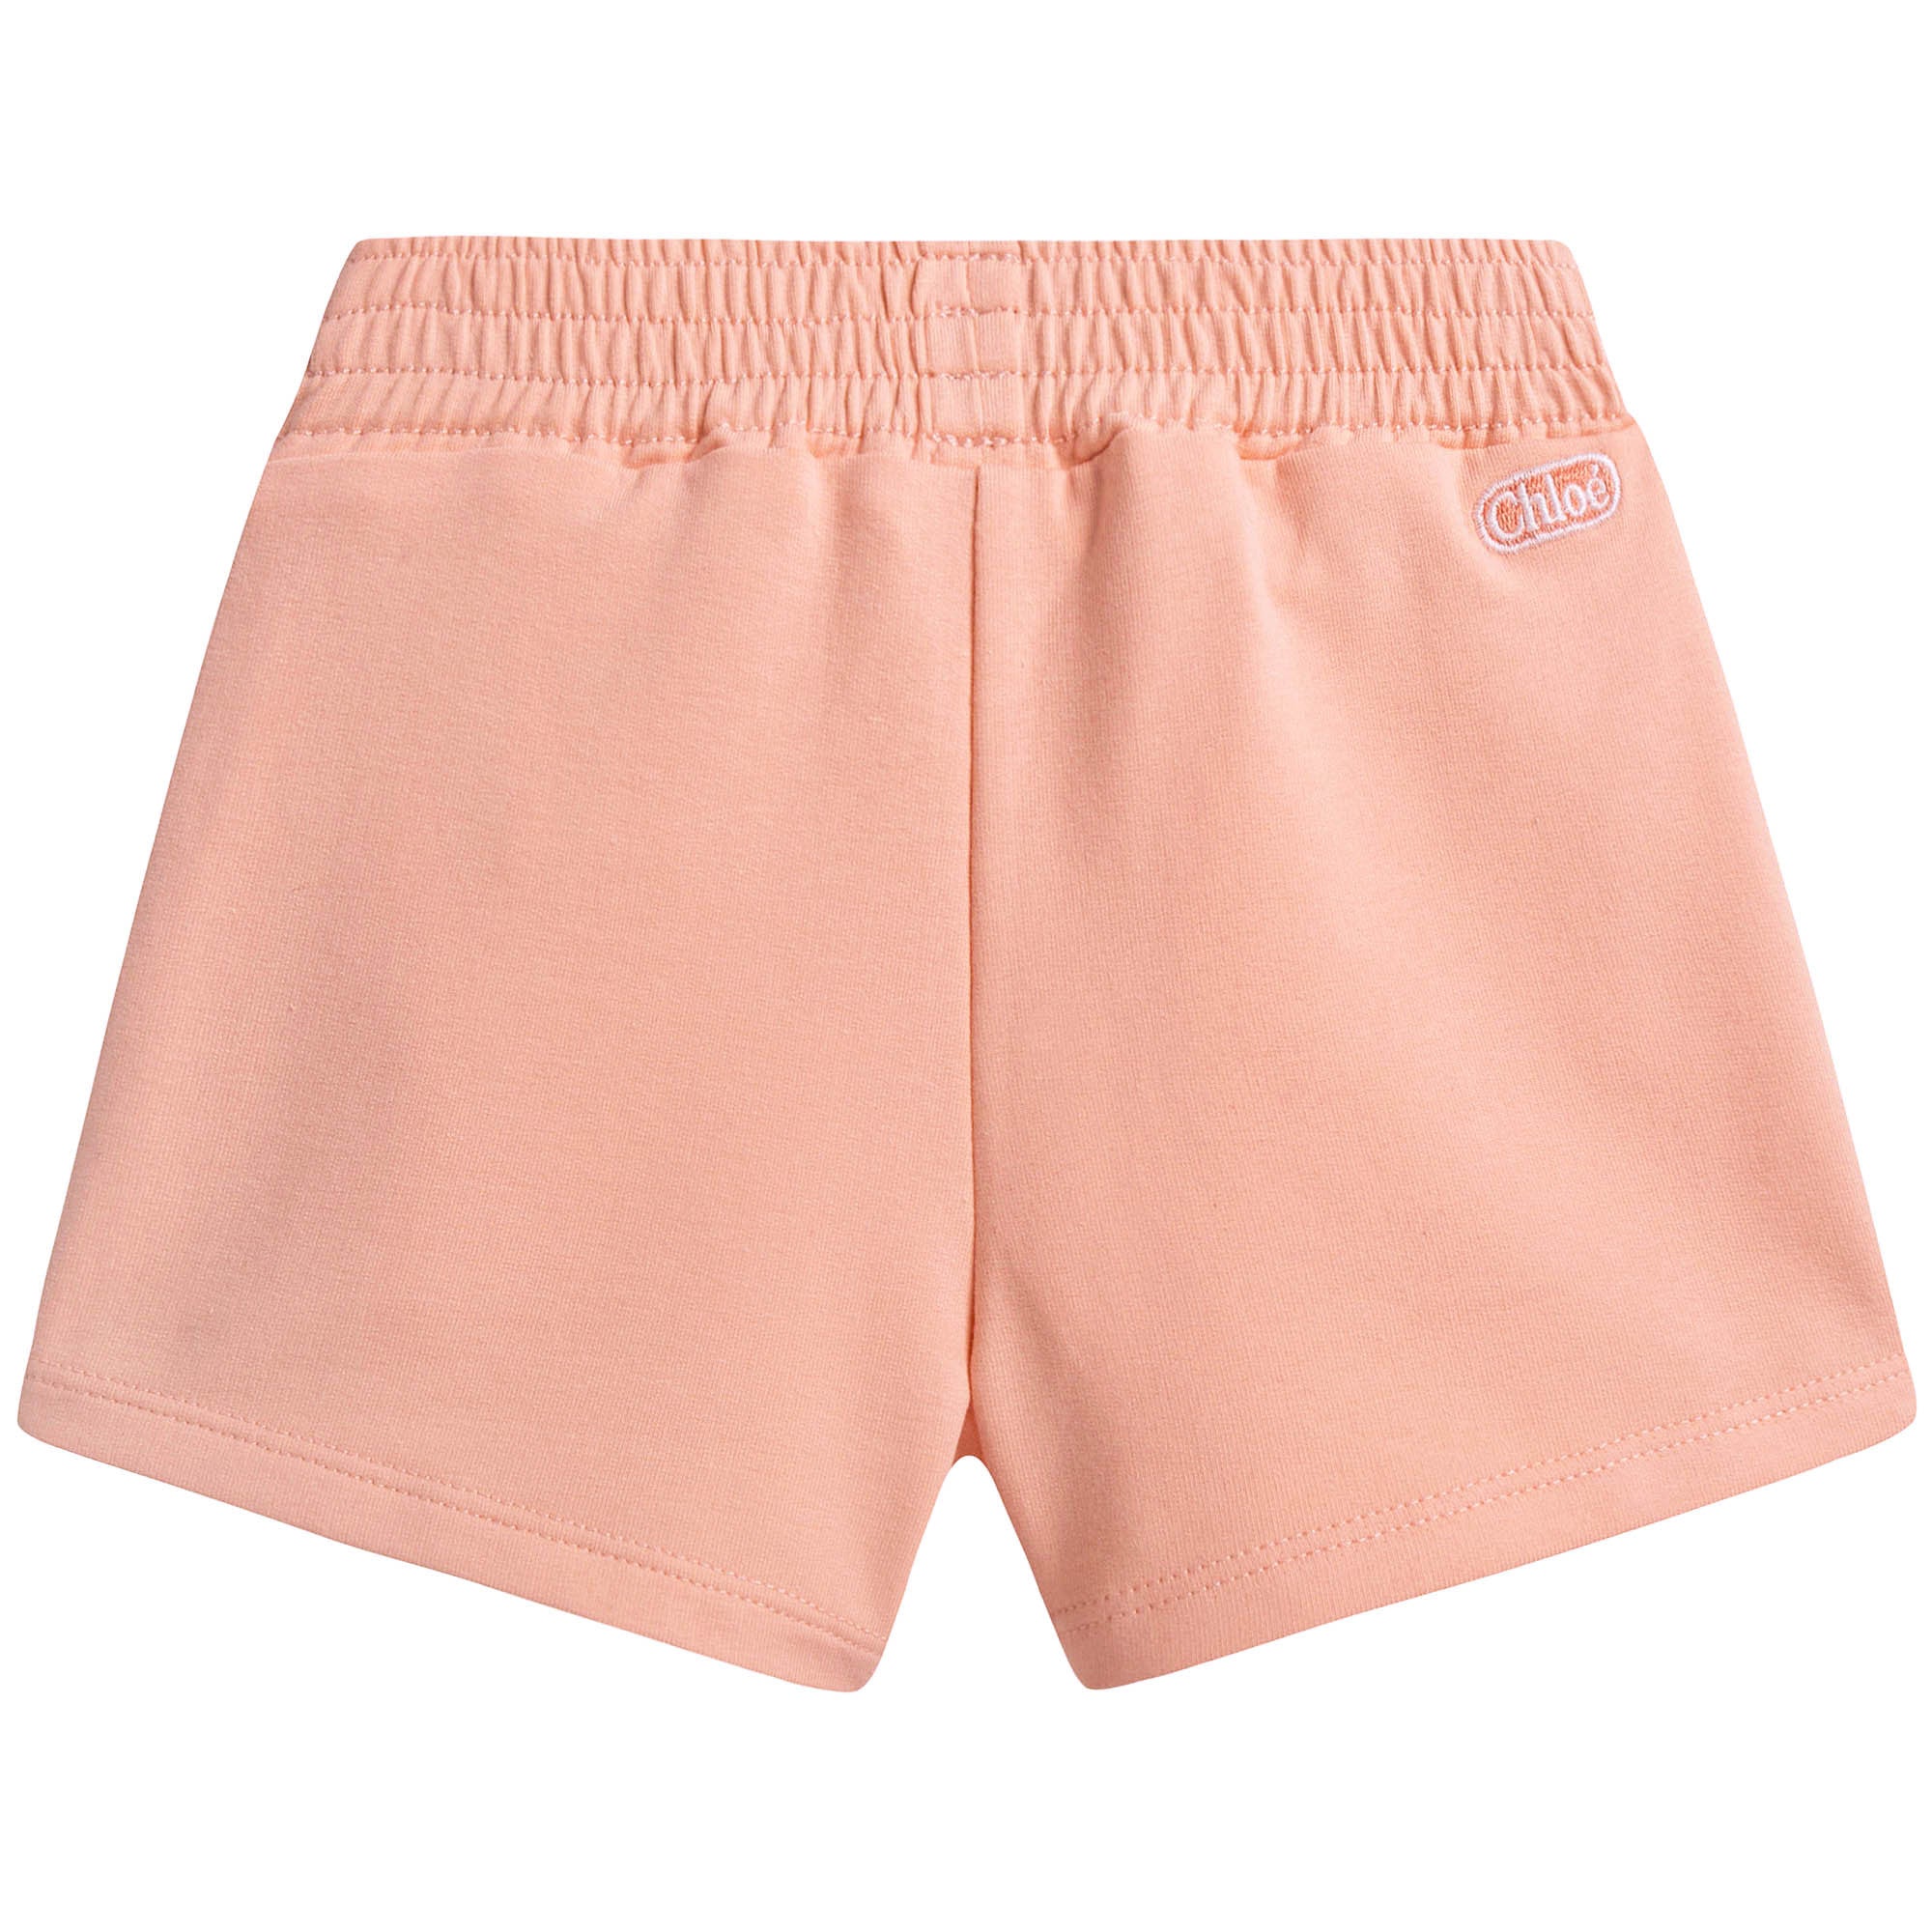 Girls Pale Orange Shorts